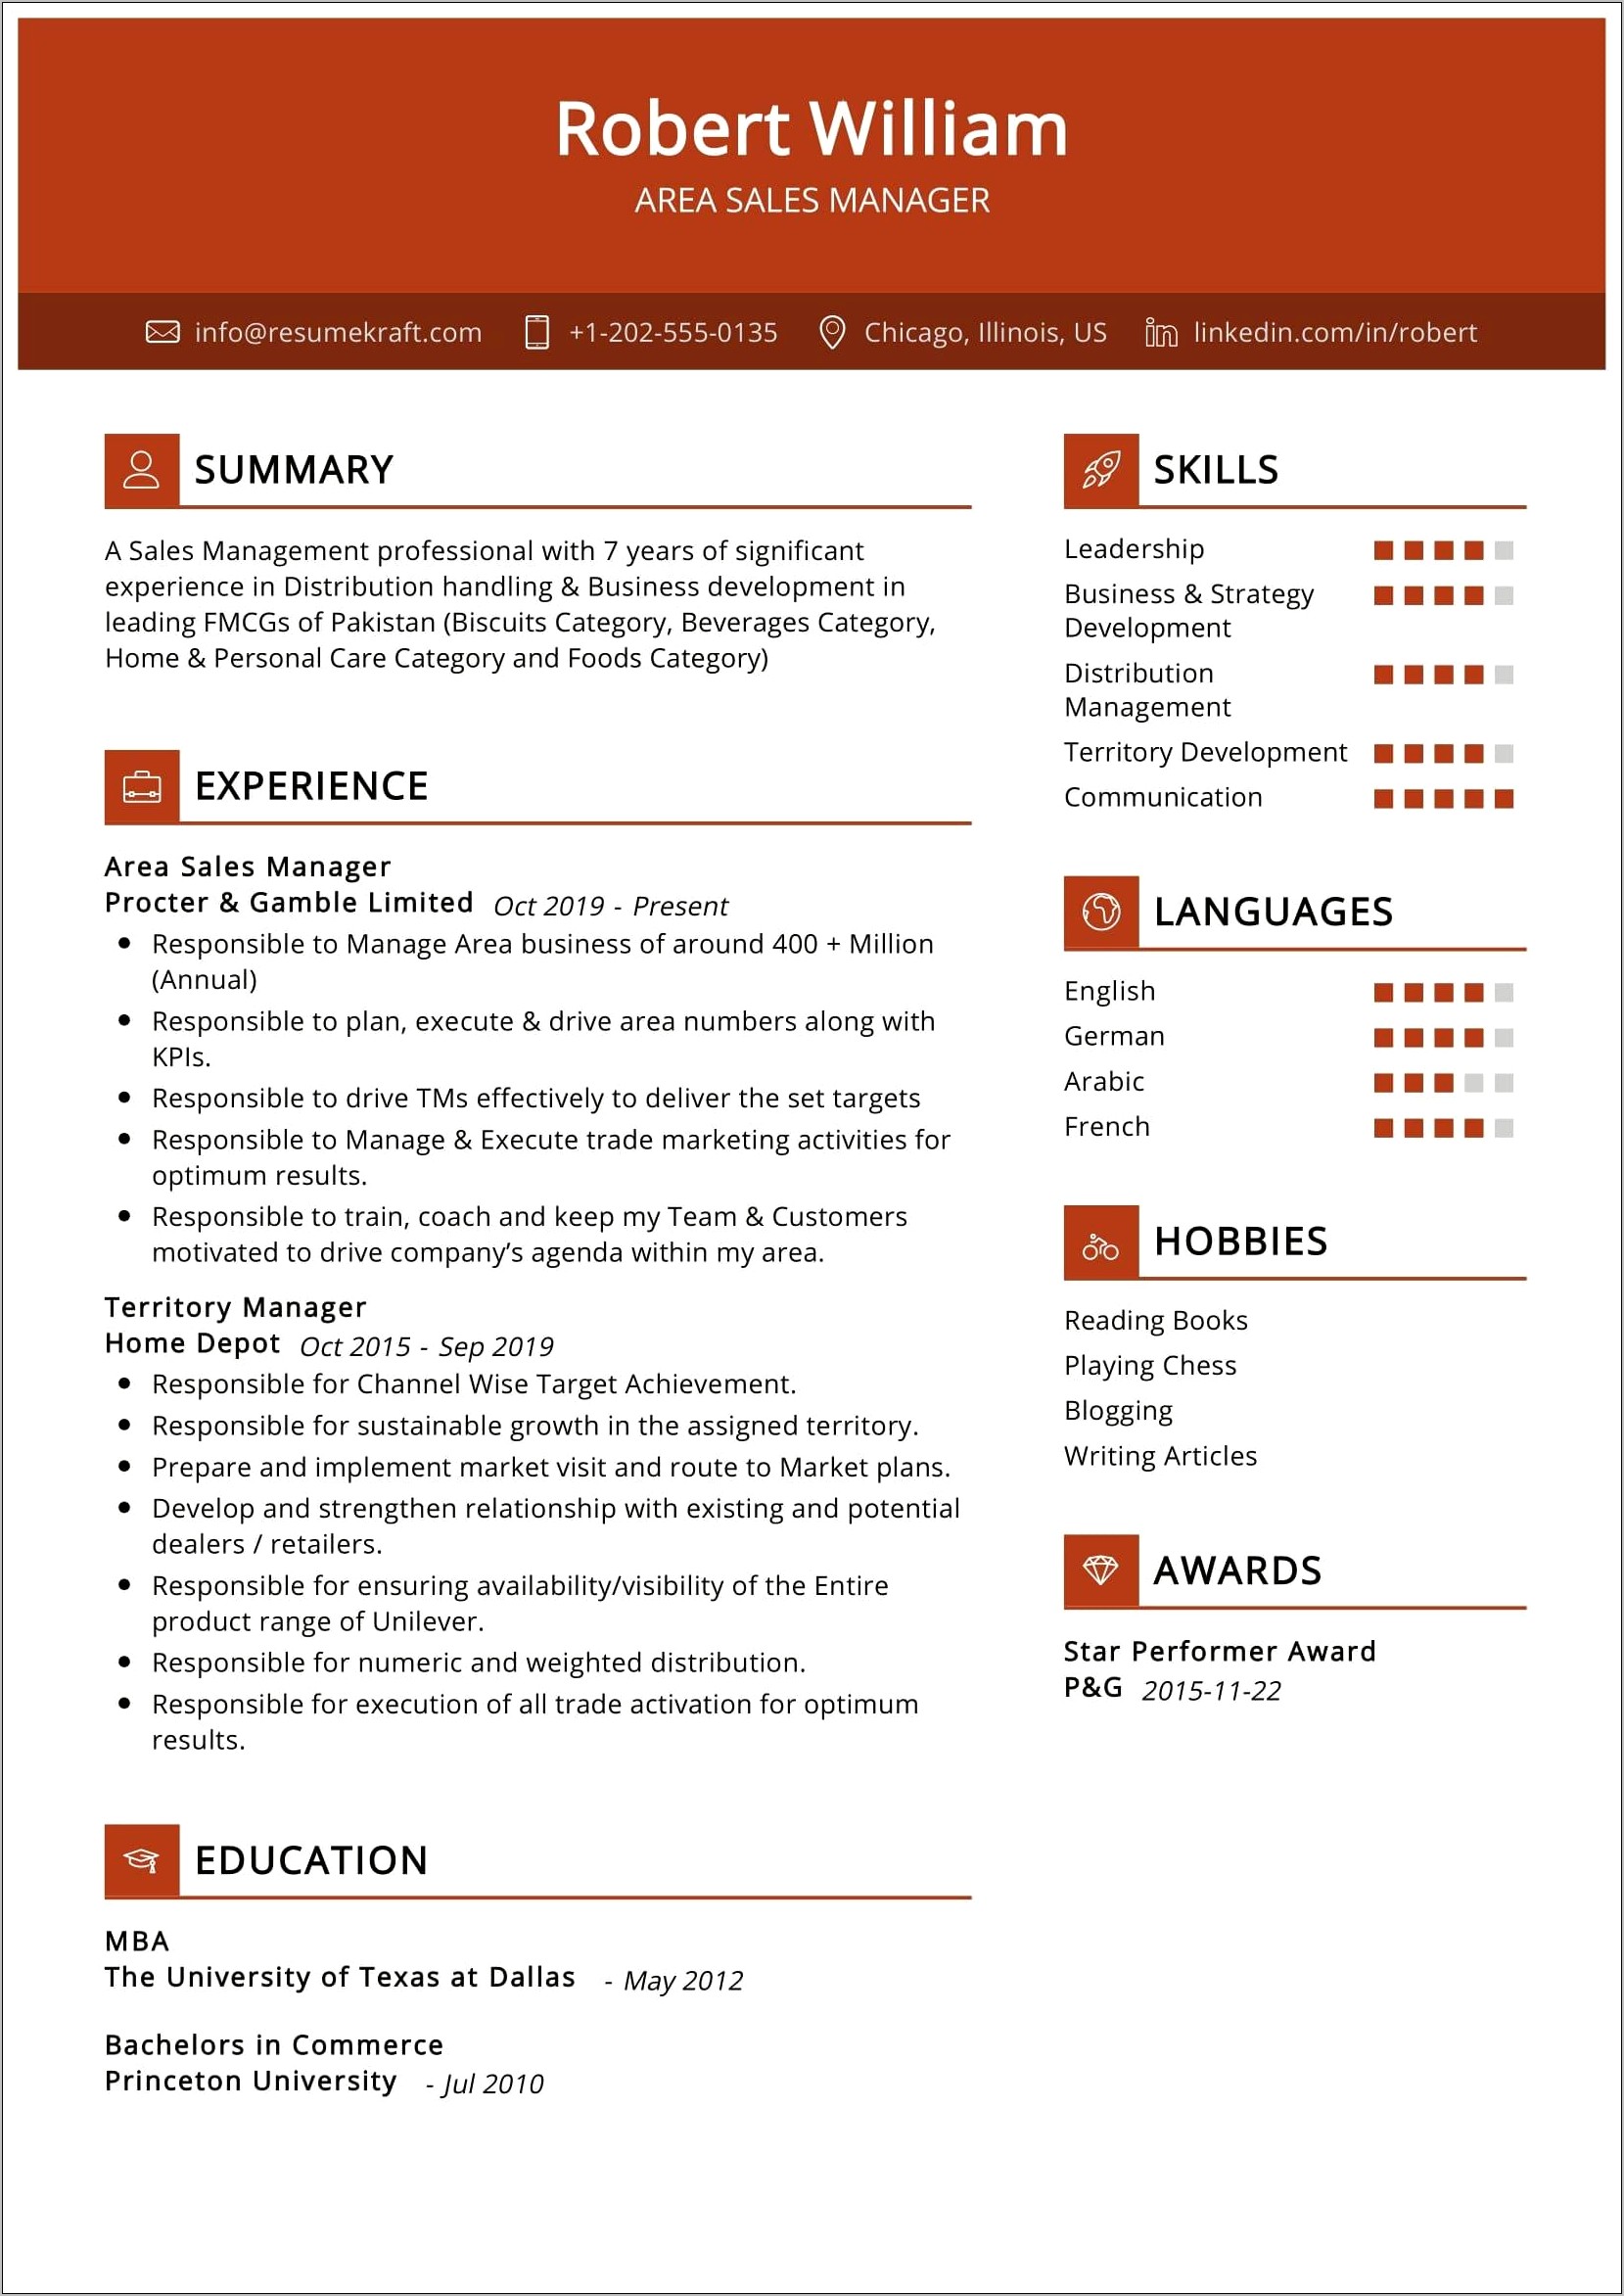 Sample Resume For Marketing Job In India